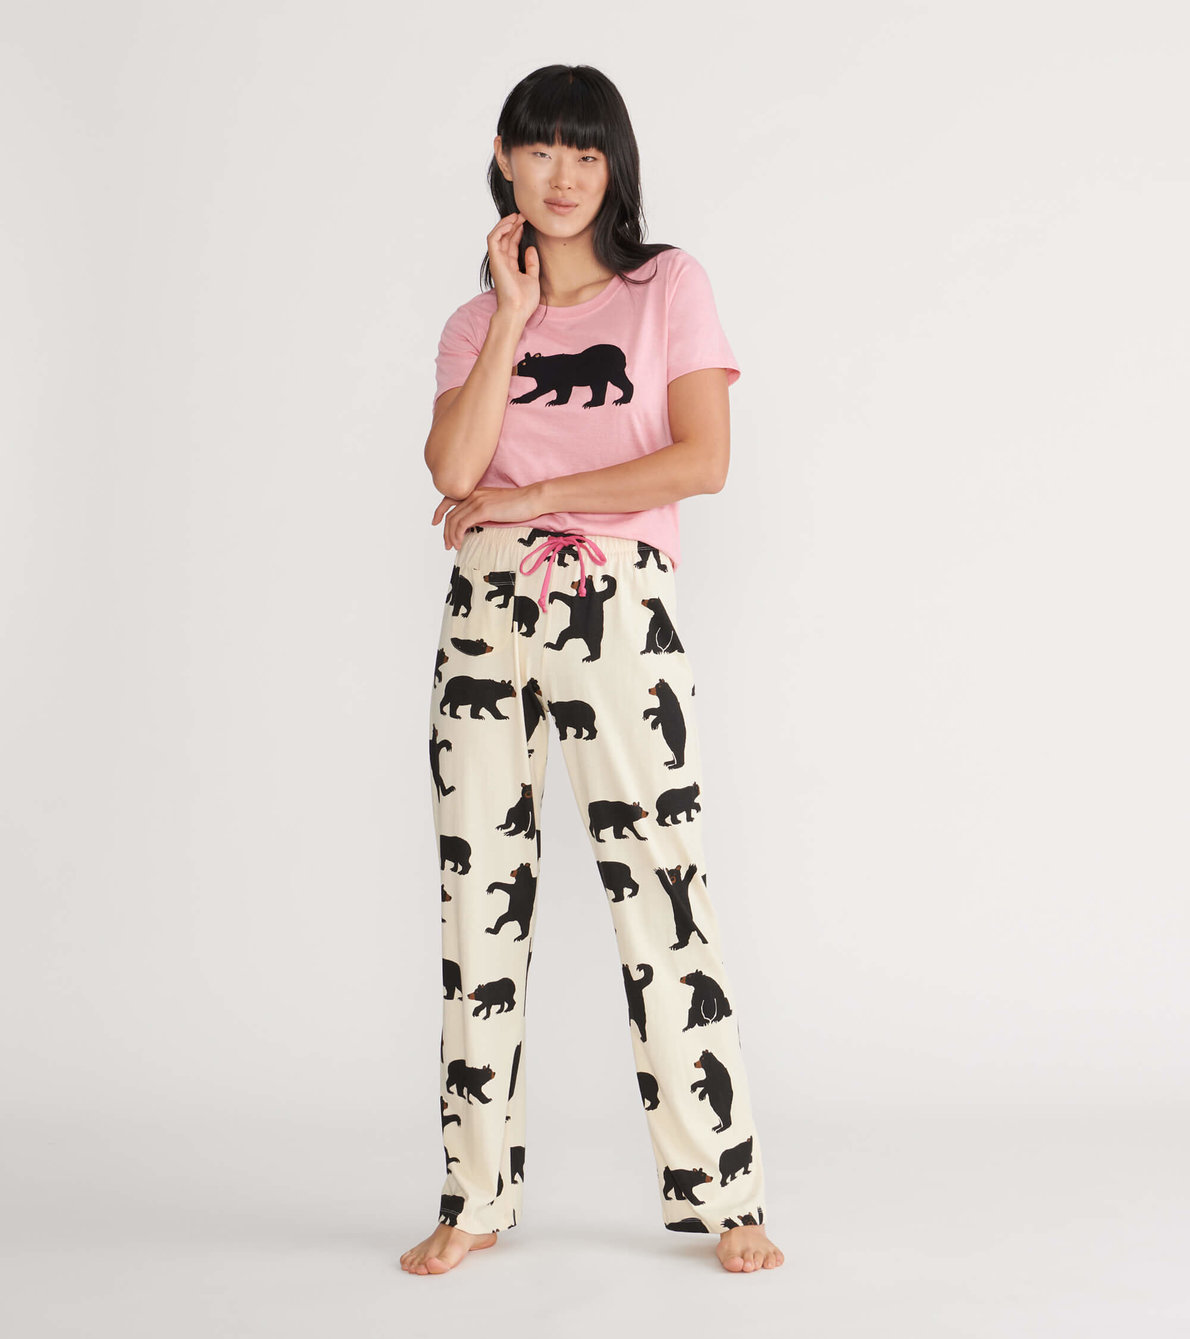 View larger image of Black Bears Women's Tee and Pants Pajama Separates